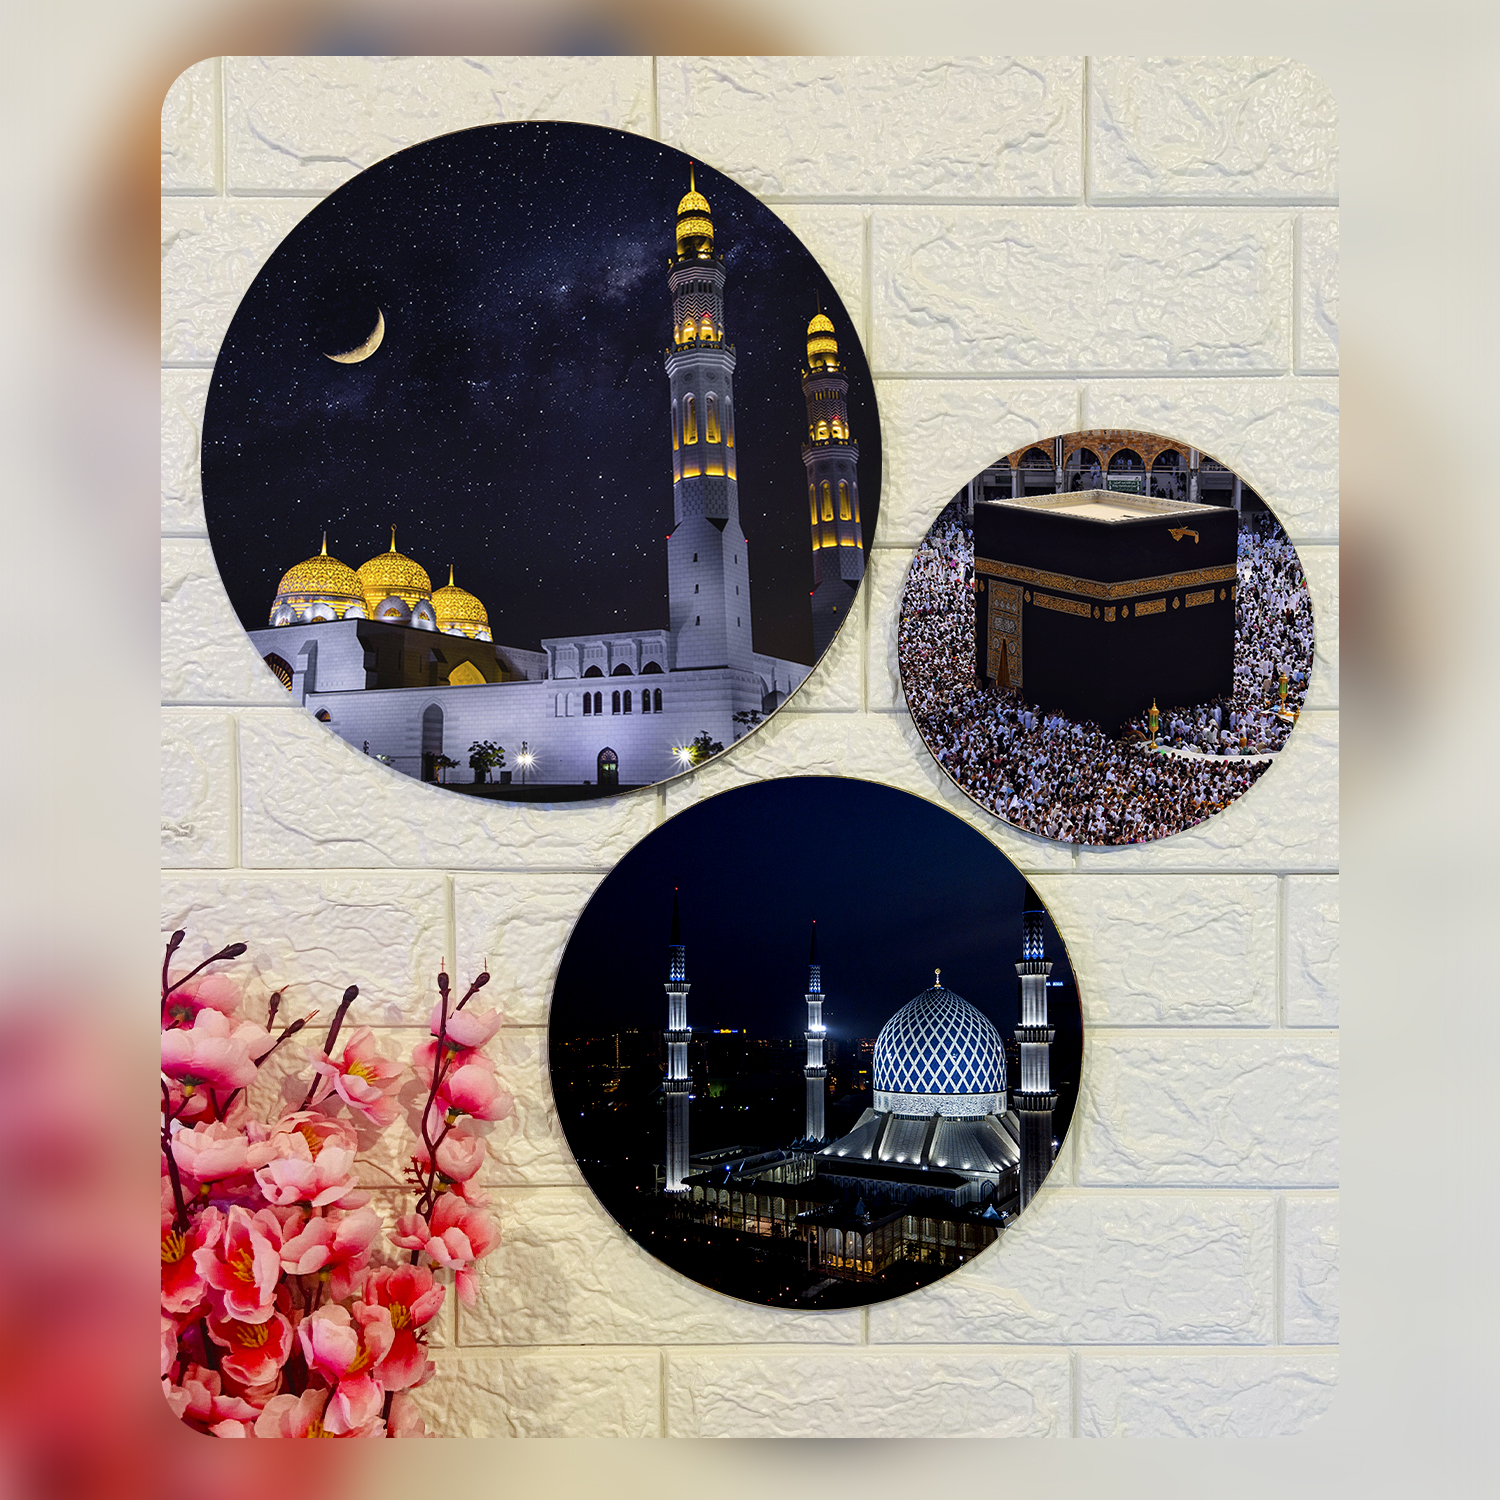 Islamic Moon Printed Wooden Plates